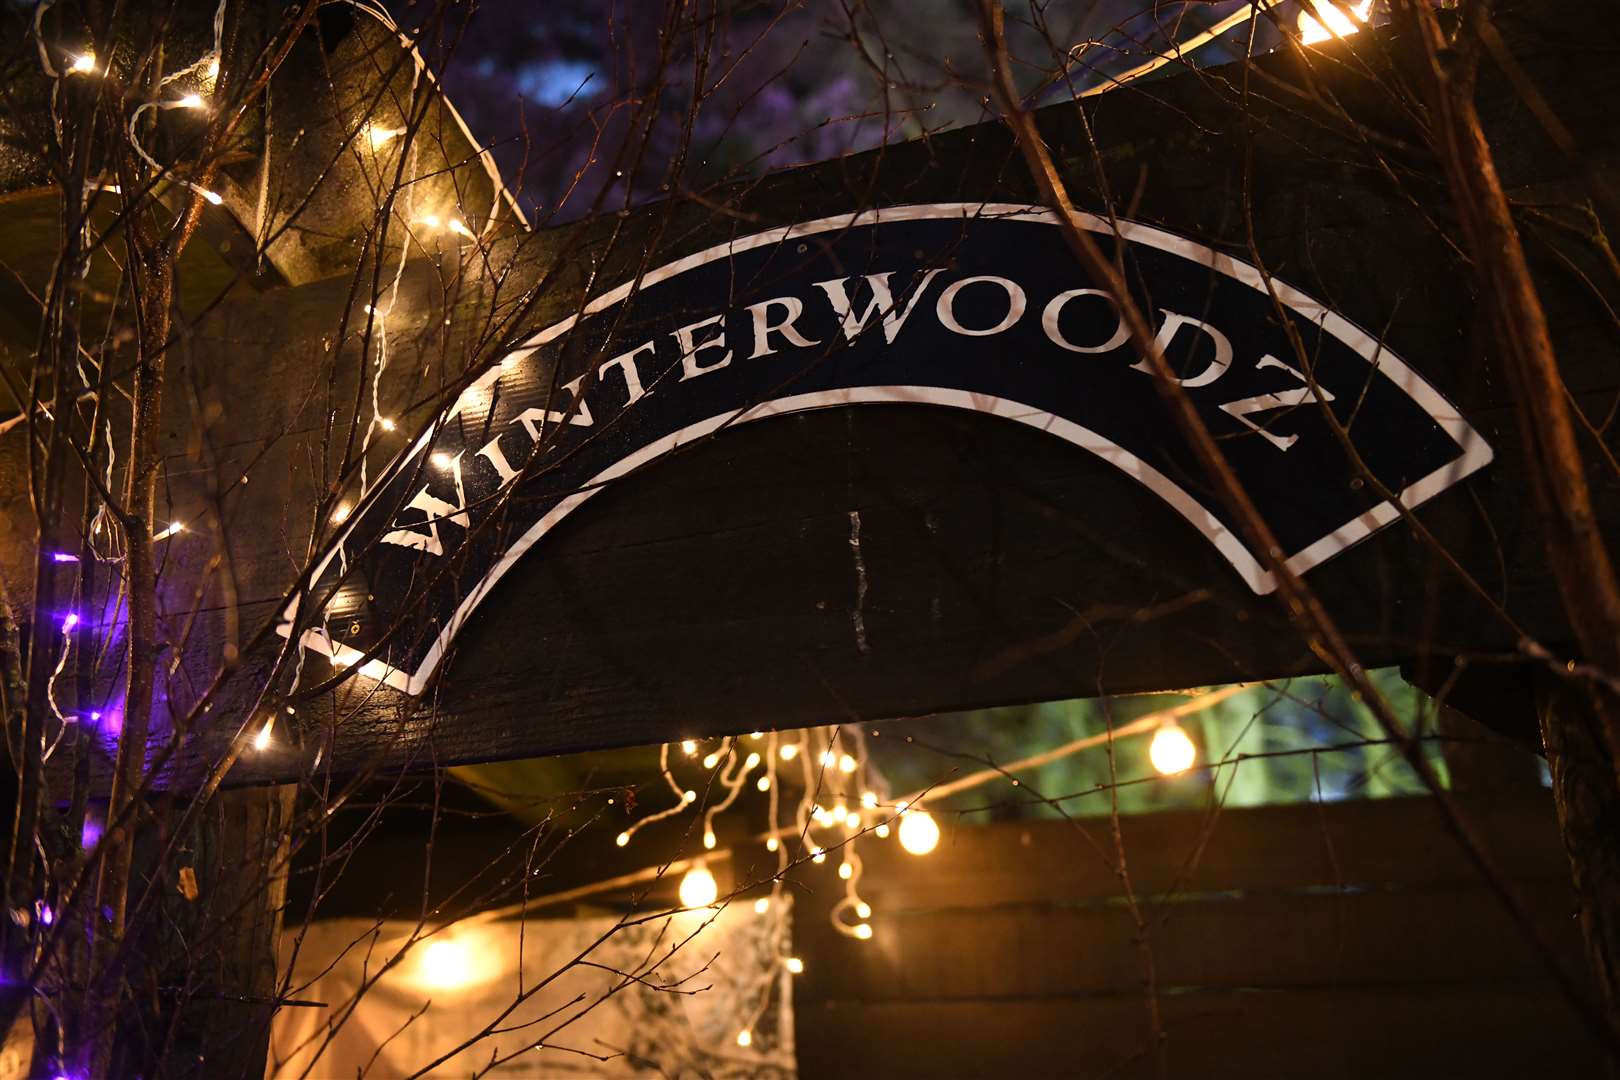 Winterwoodz sign. Picture: James Mackenzie.